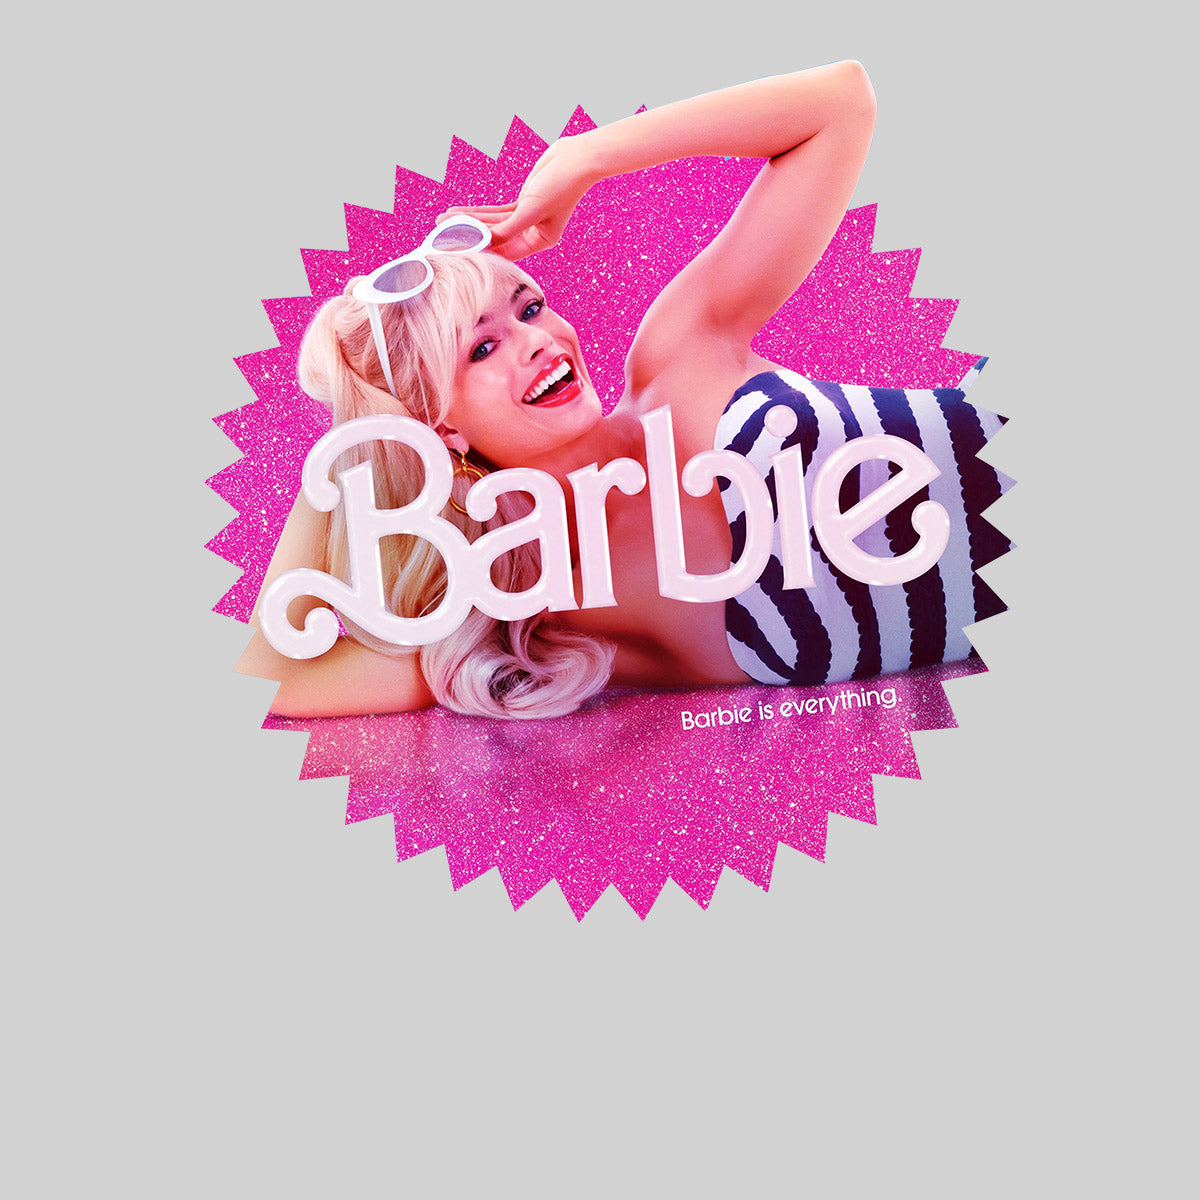 Barbie Movie T-Shirt for Kids - Margot Robbie Inspired Design